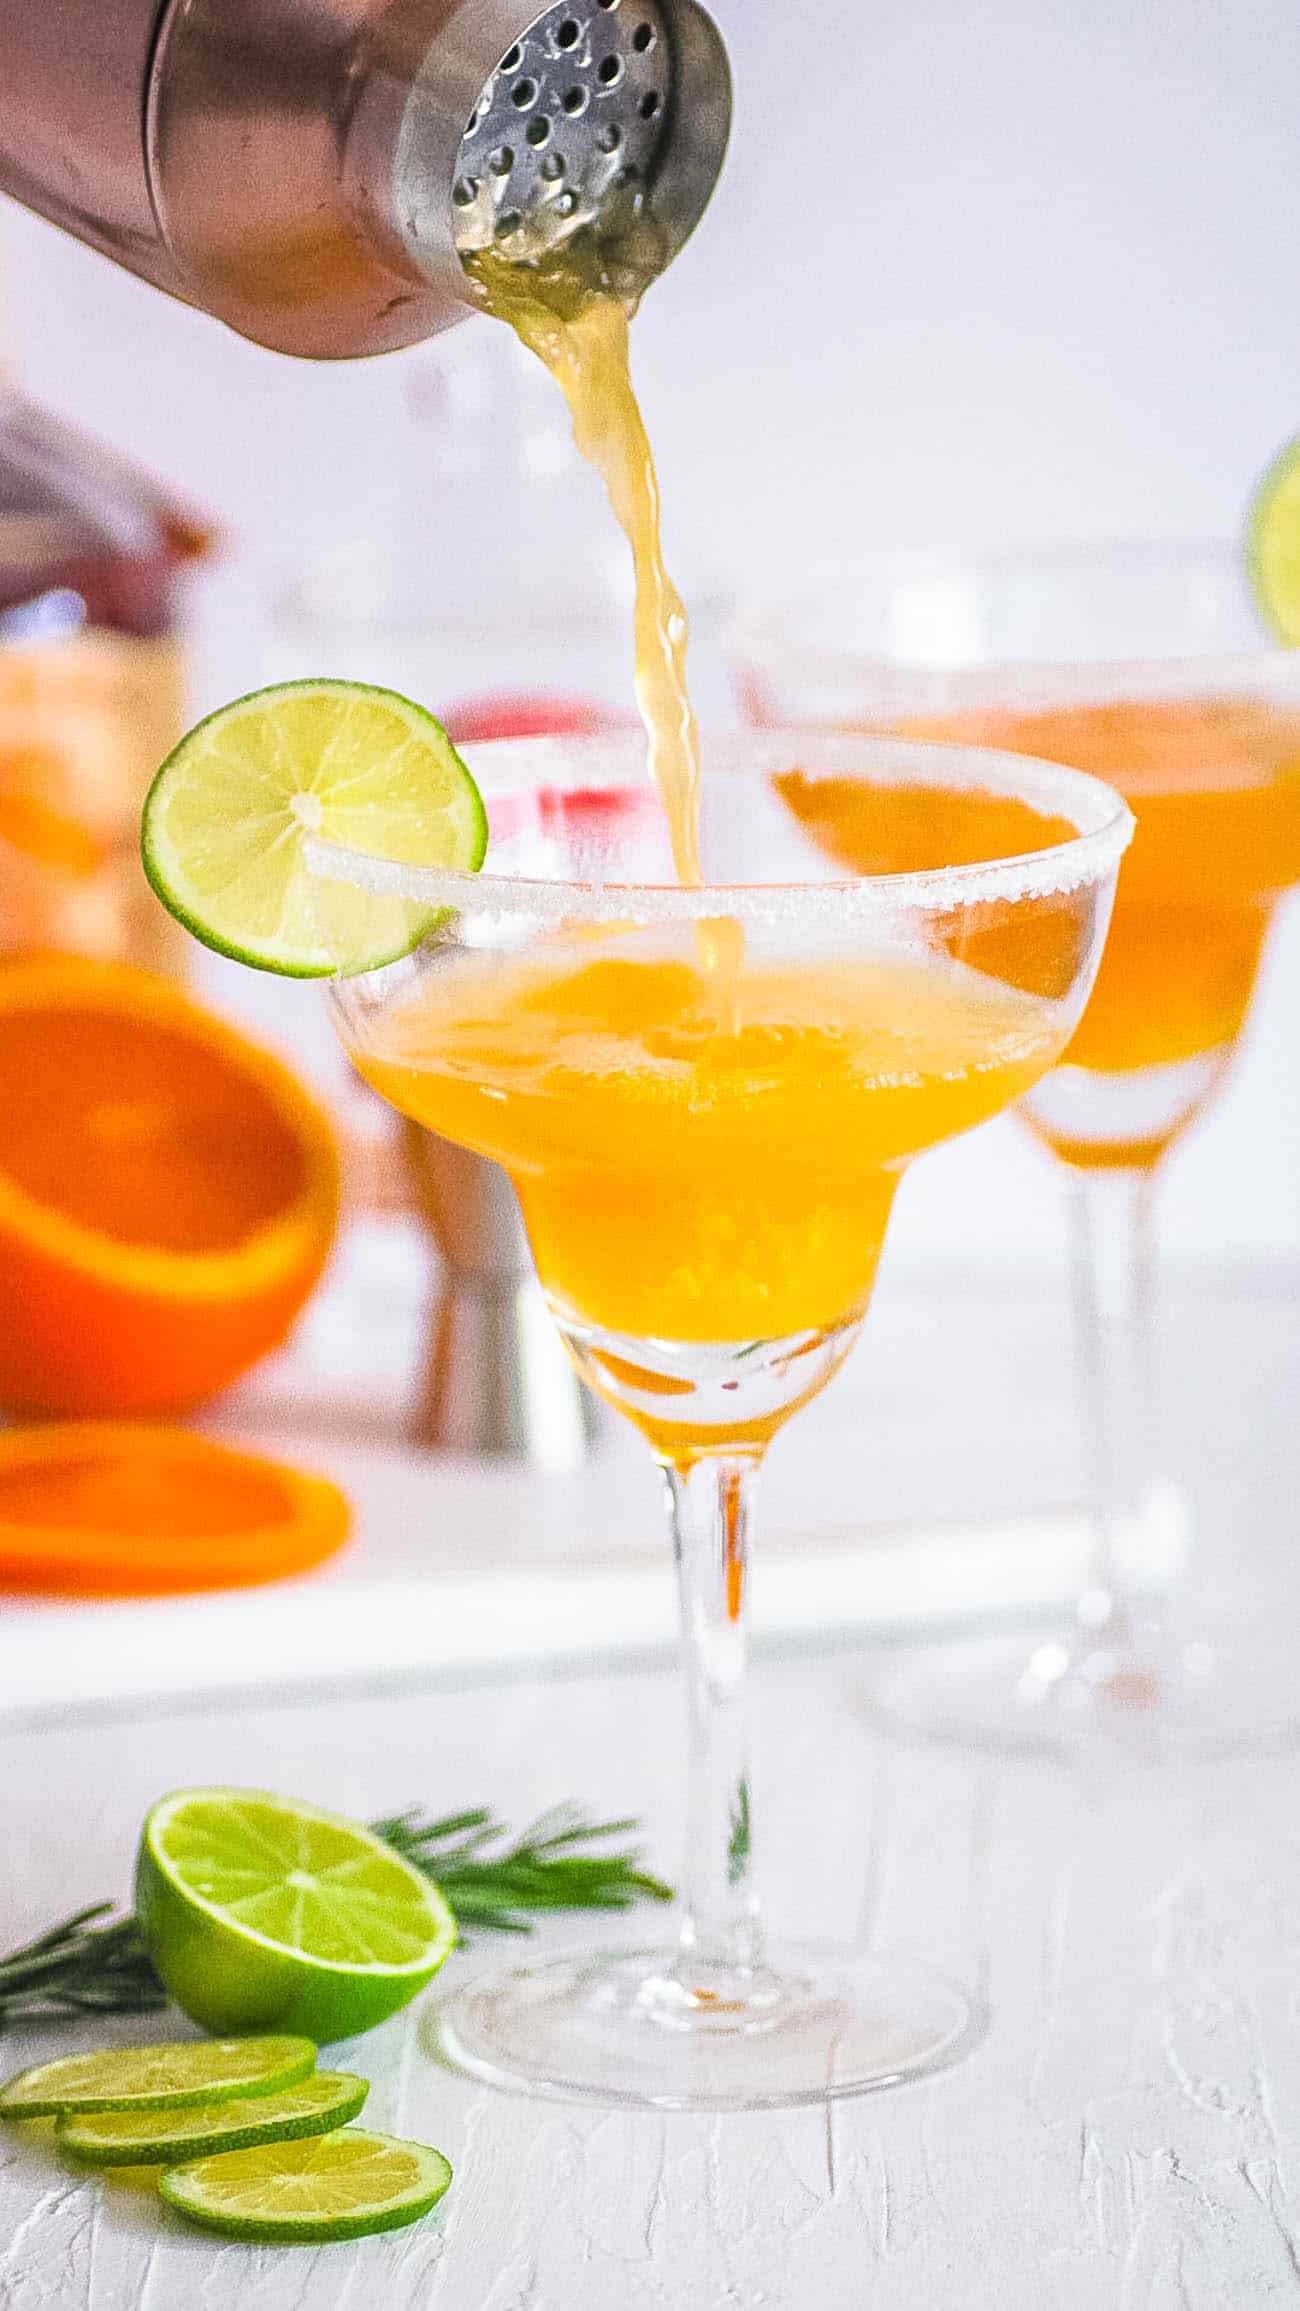 easy italian margarita recipe with amaretto and orange juice - cocktail served in a margarita glass